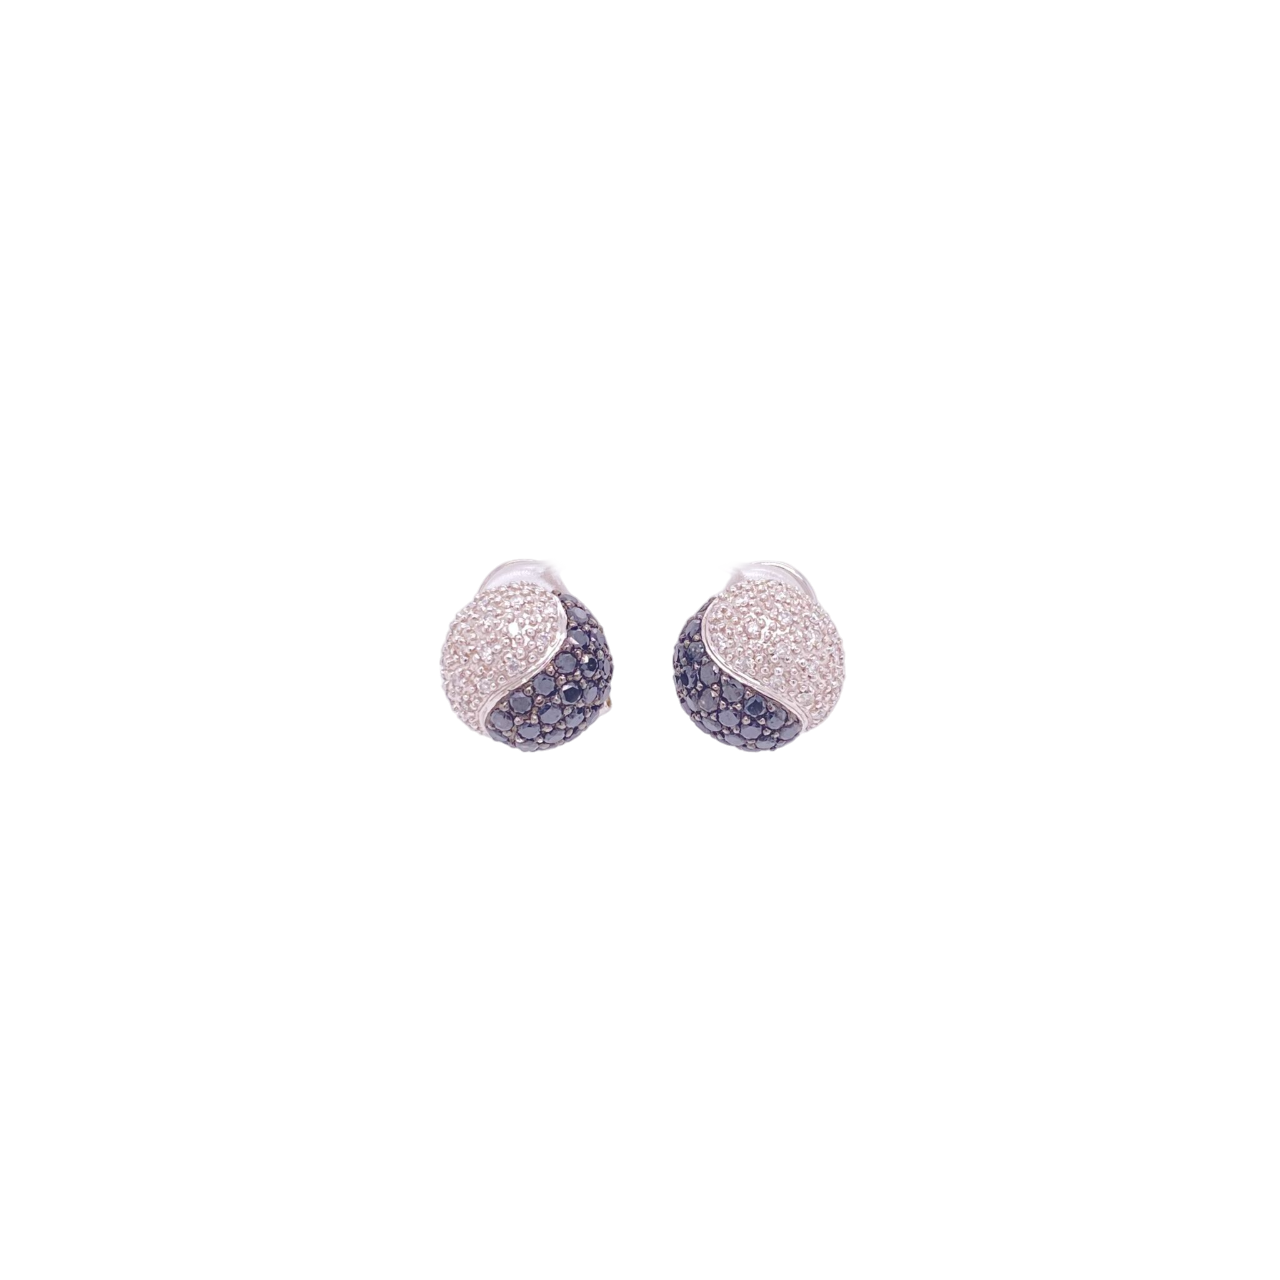 Black Diamond Earrings 14 Karat White Gold 1.80 Carats